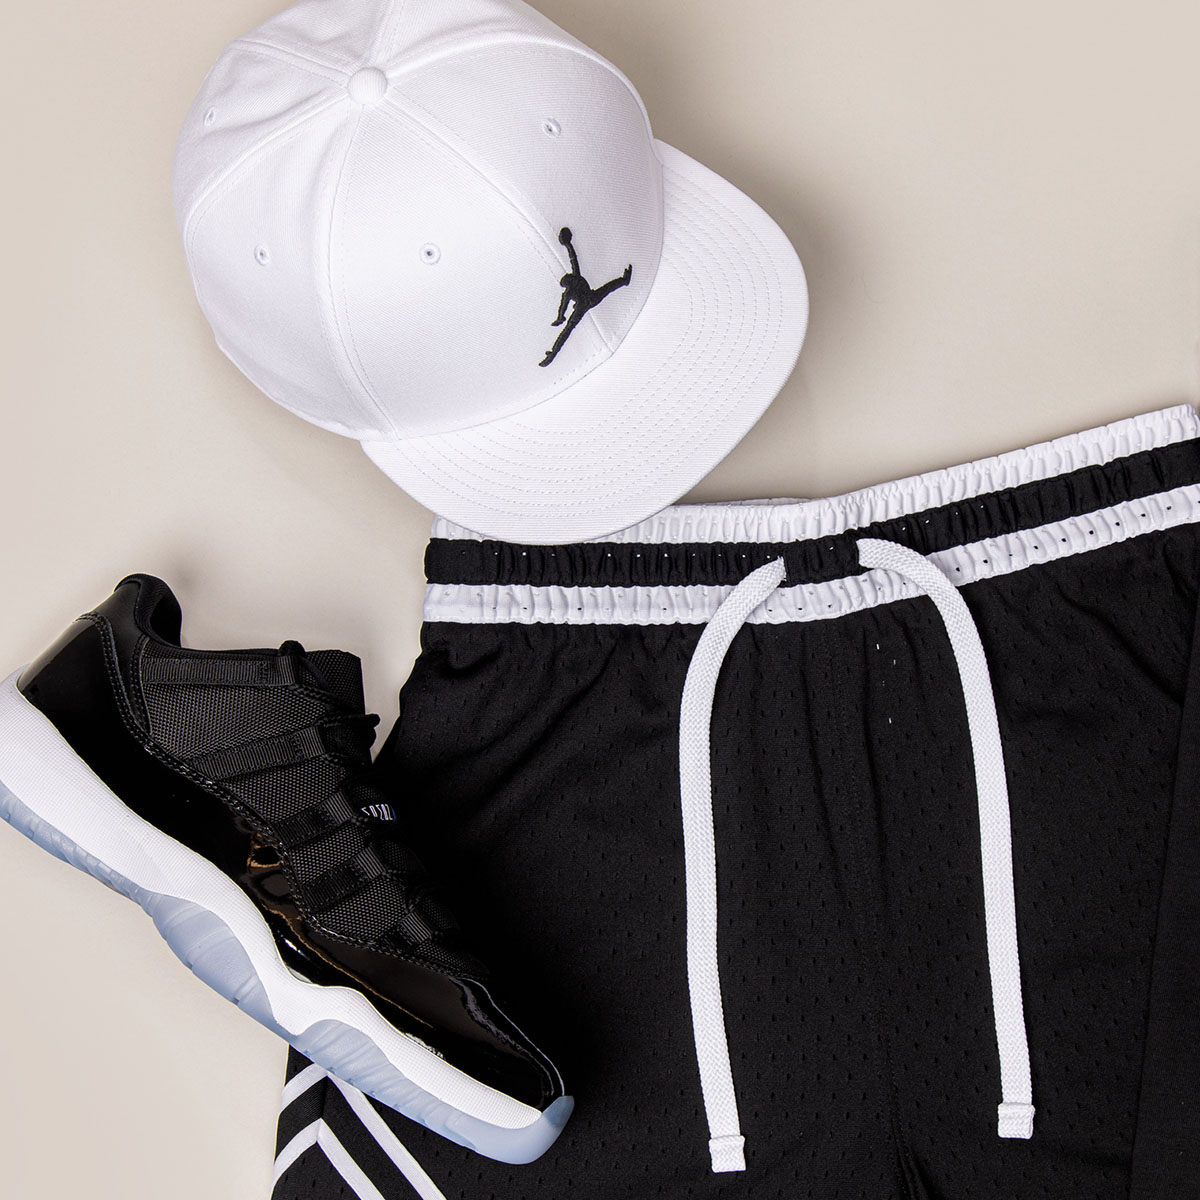 Air Jordan 11 Low Space Jam Black White Hat Shirt Shorts Outfit 2